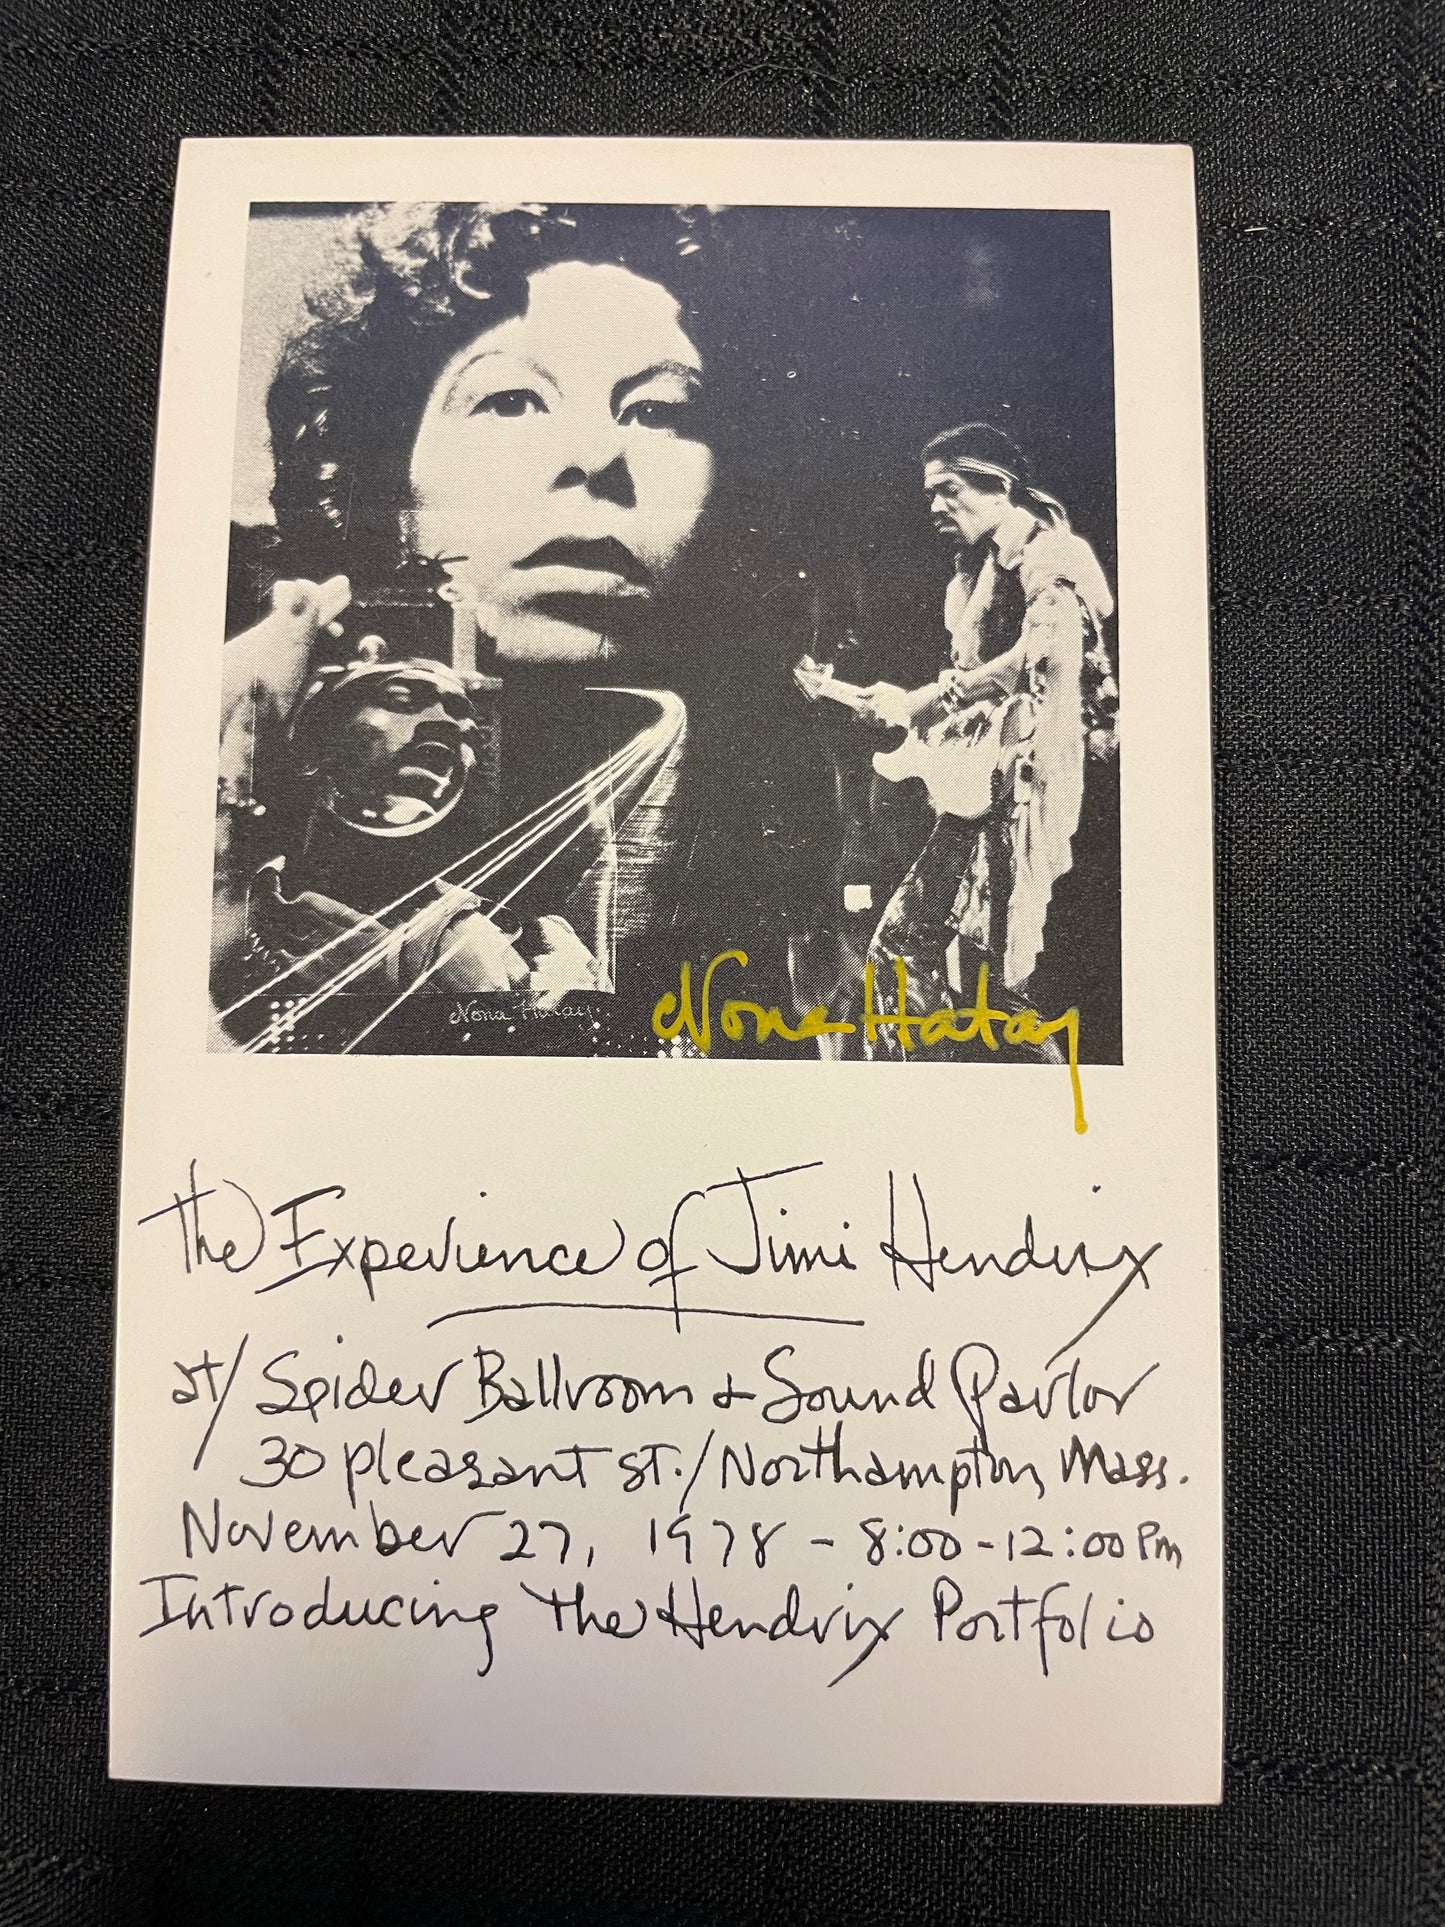 The Experience of Jimi Hendrix At Spider Ballroom